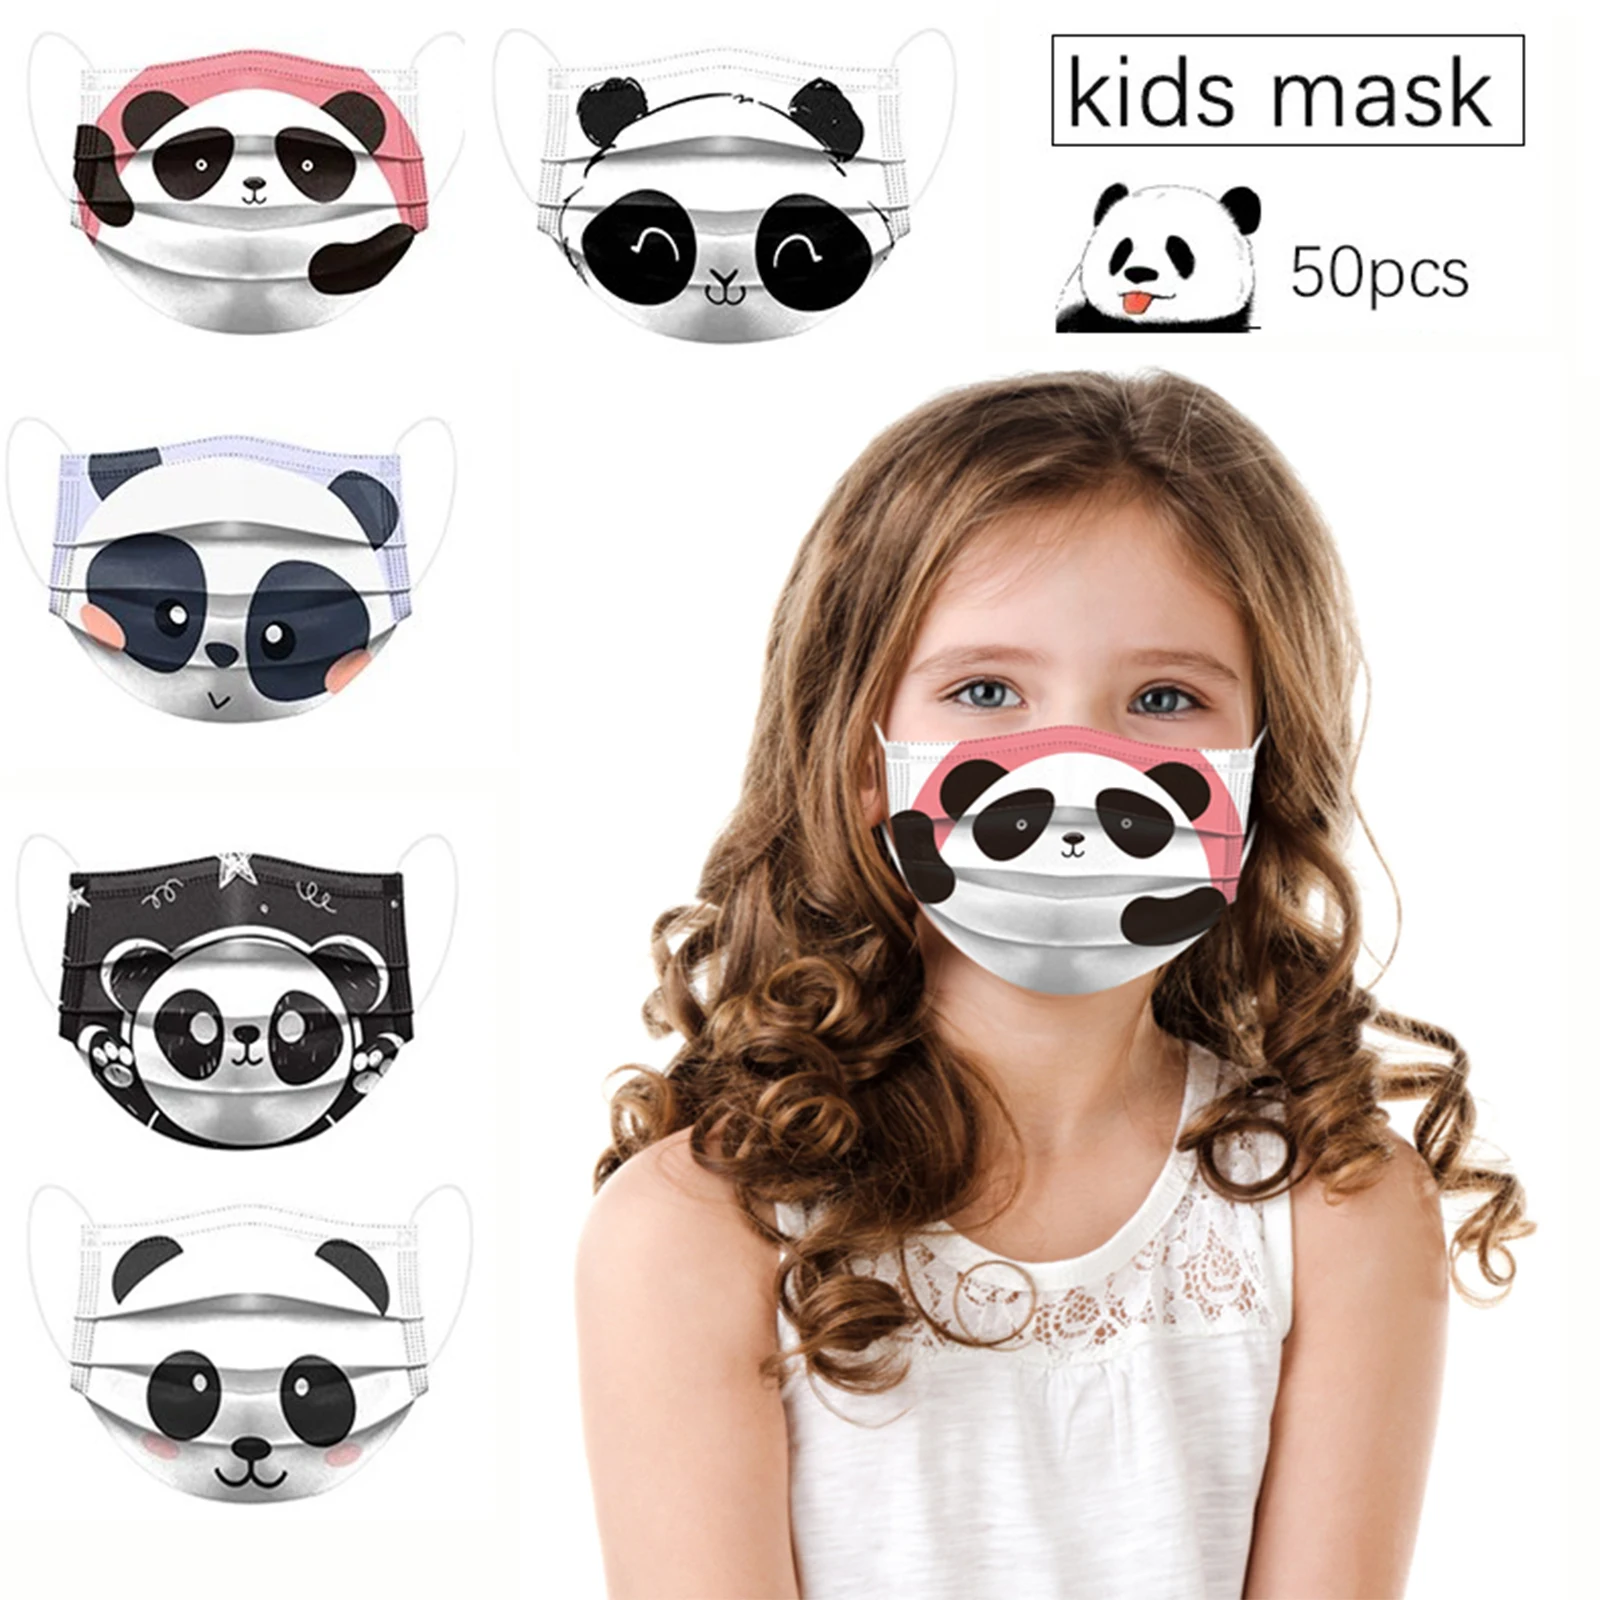 

50pcs Kids cartoon Face Masks Cute Panda Pattern Masker Boy Girl 3ply Earloop Protective Mask Child Disposable Dust Mascarillas